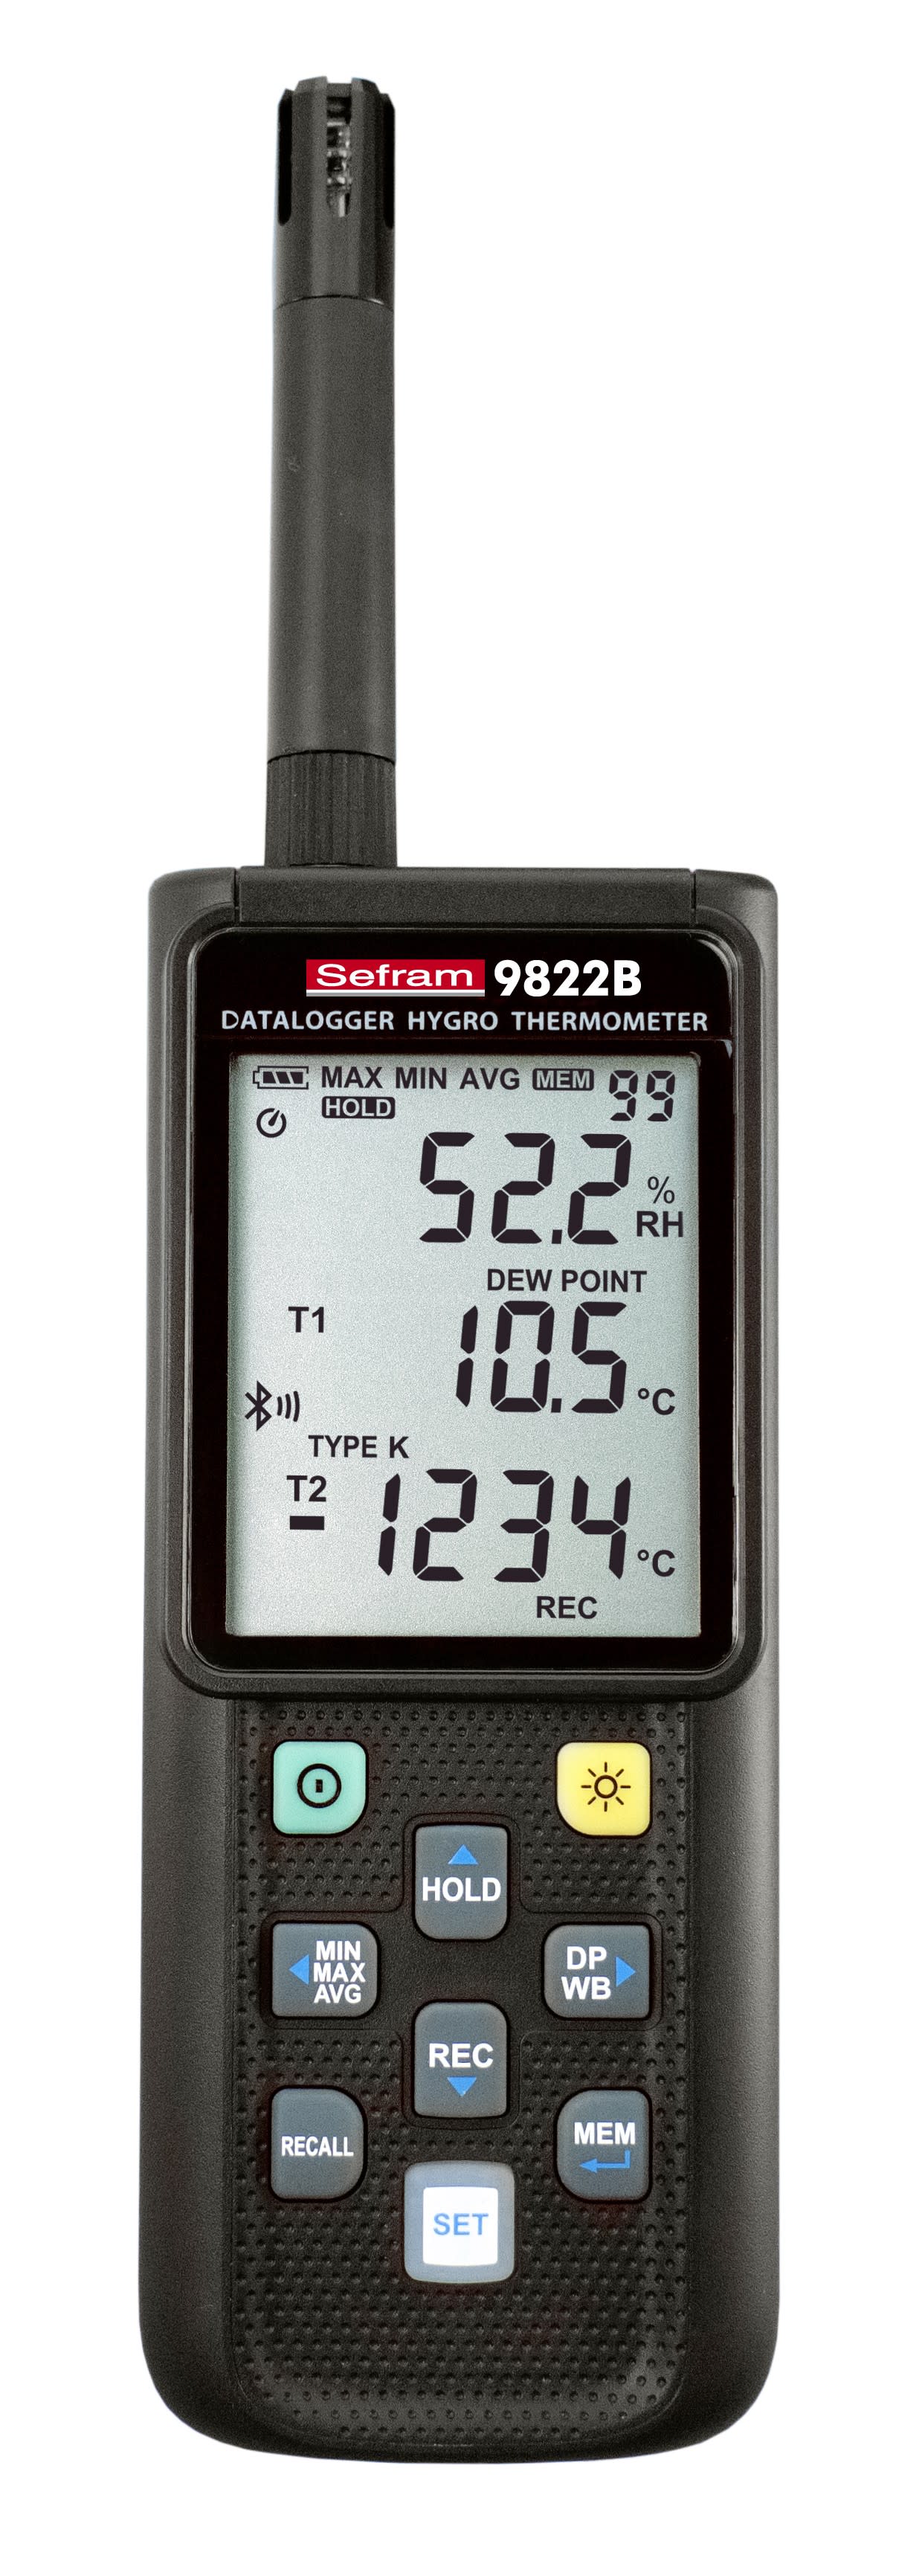 Sefram - Thermomètre hygromètre portable.Thermocouple K,J,E,T,N,R,S.Humidité 0 à 100%.